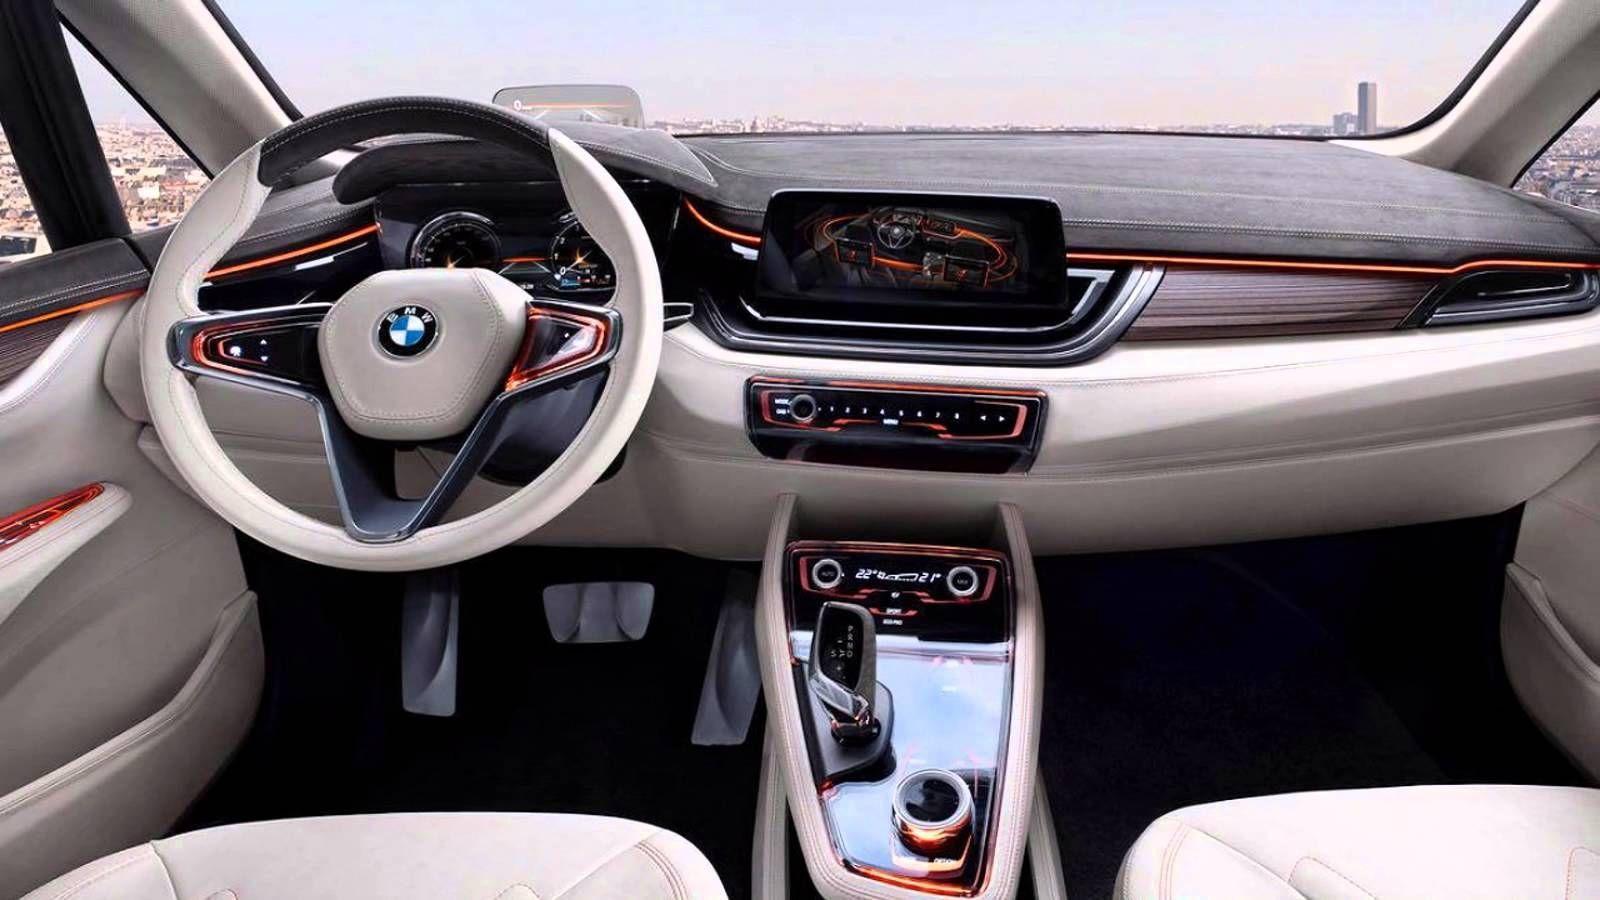 BMW X7. New Design HD Wallpaper. New Car Release News